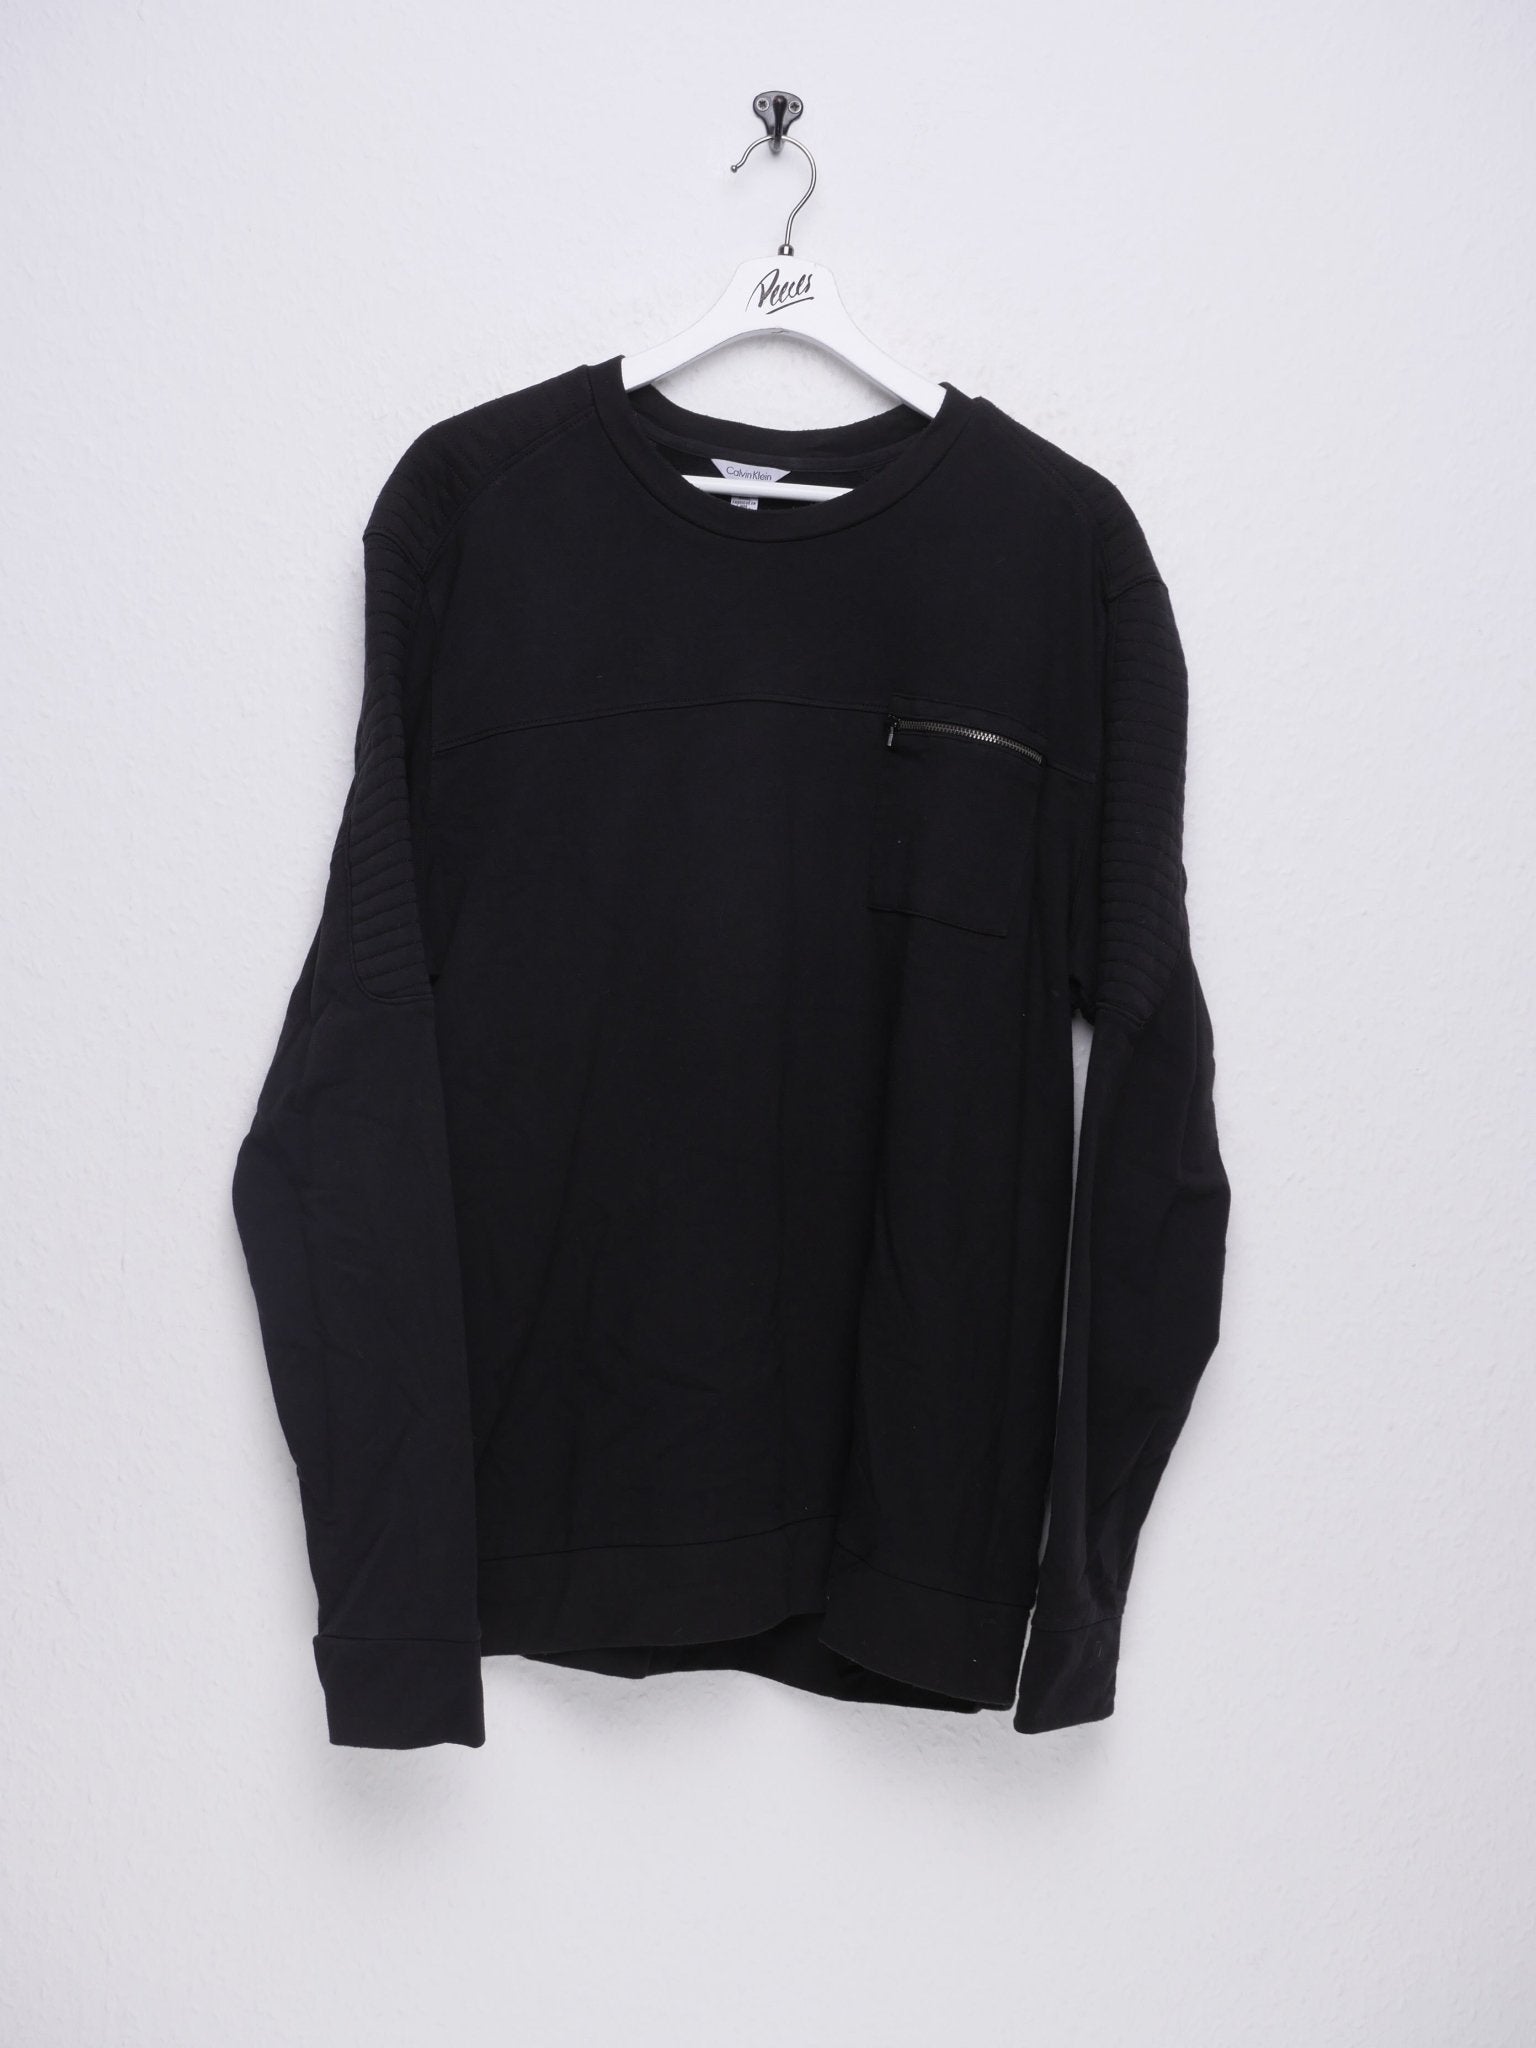 Calvin Klein black basic Sweater - Peeces